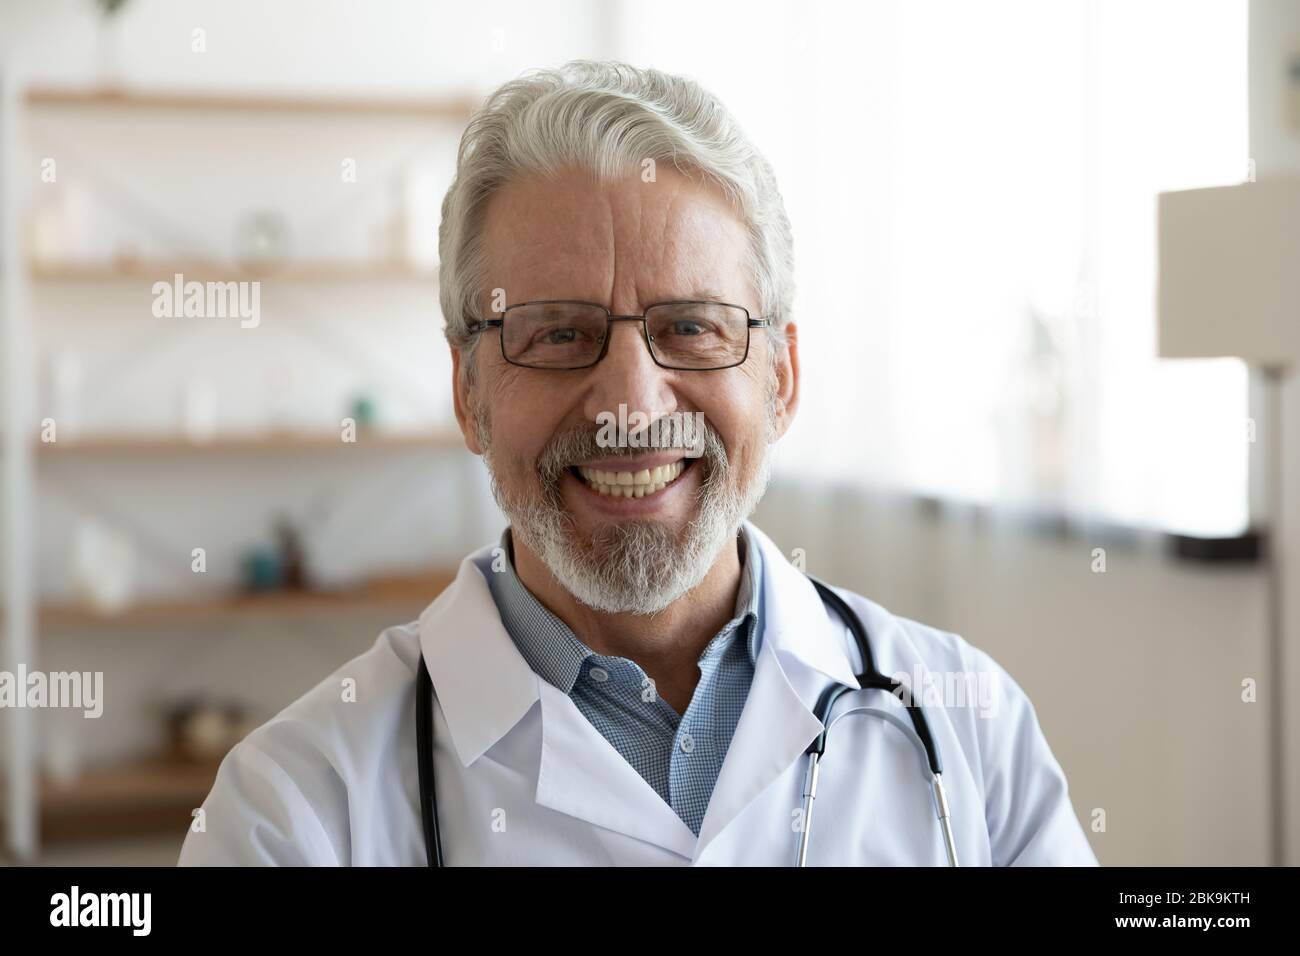 Lächelnd professionelle ältere Mann Arzt Blick auf Kamera, Nahaufnahme Porträt Stockfoto